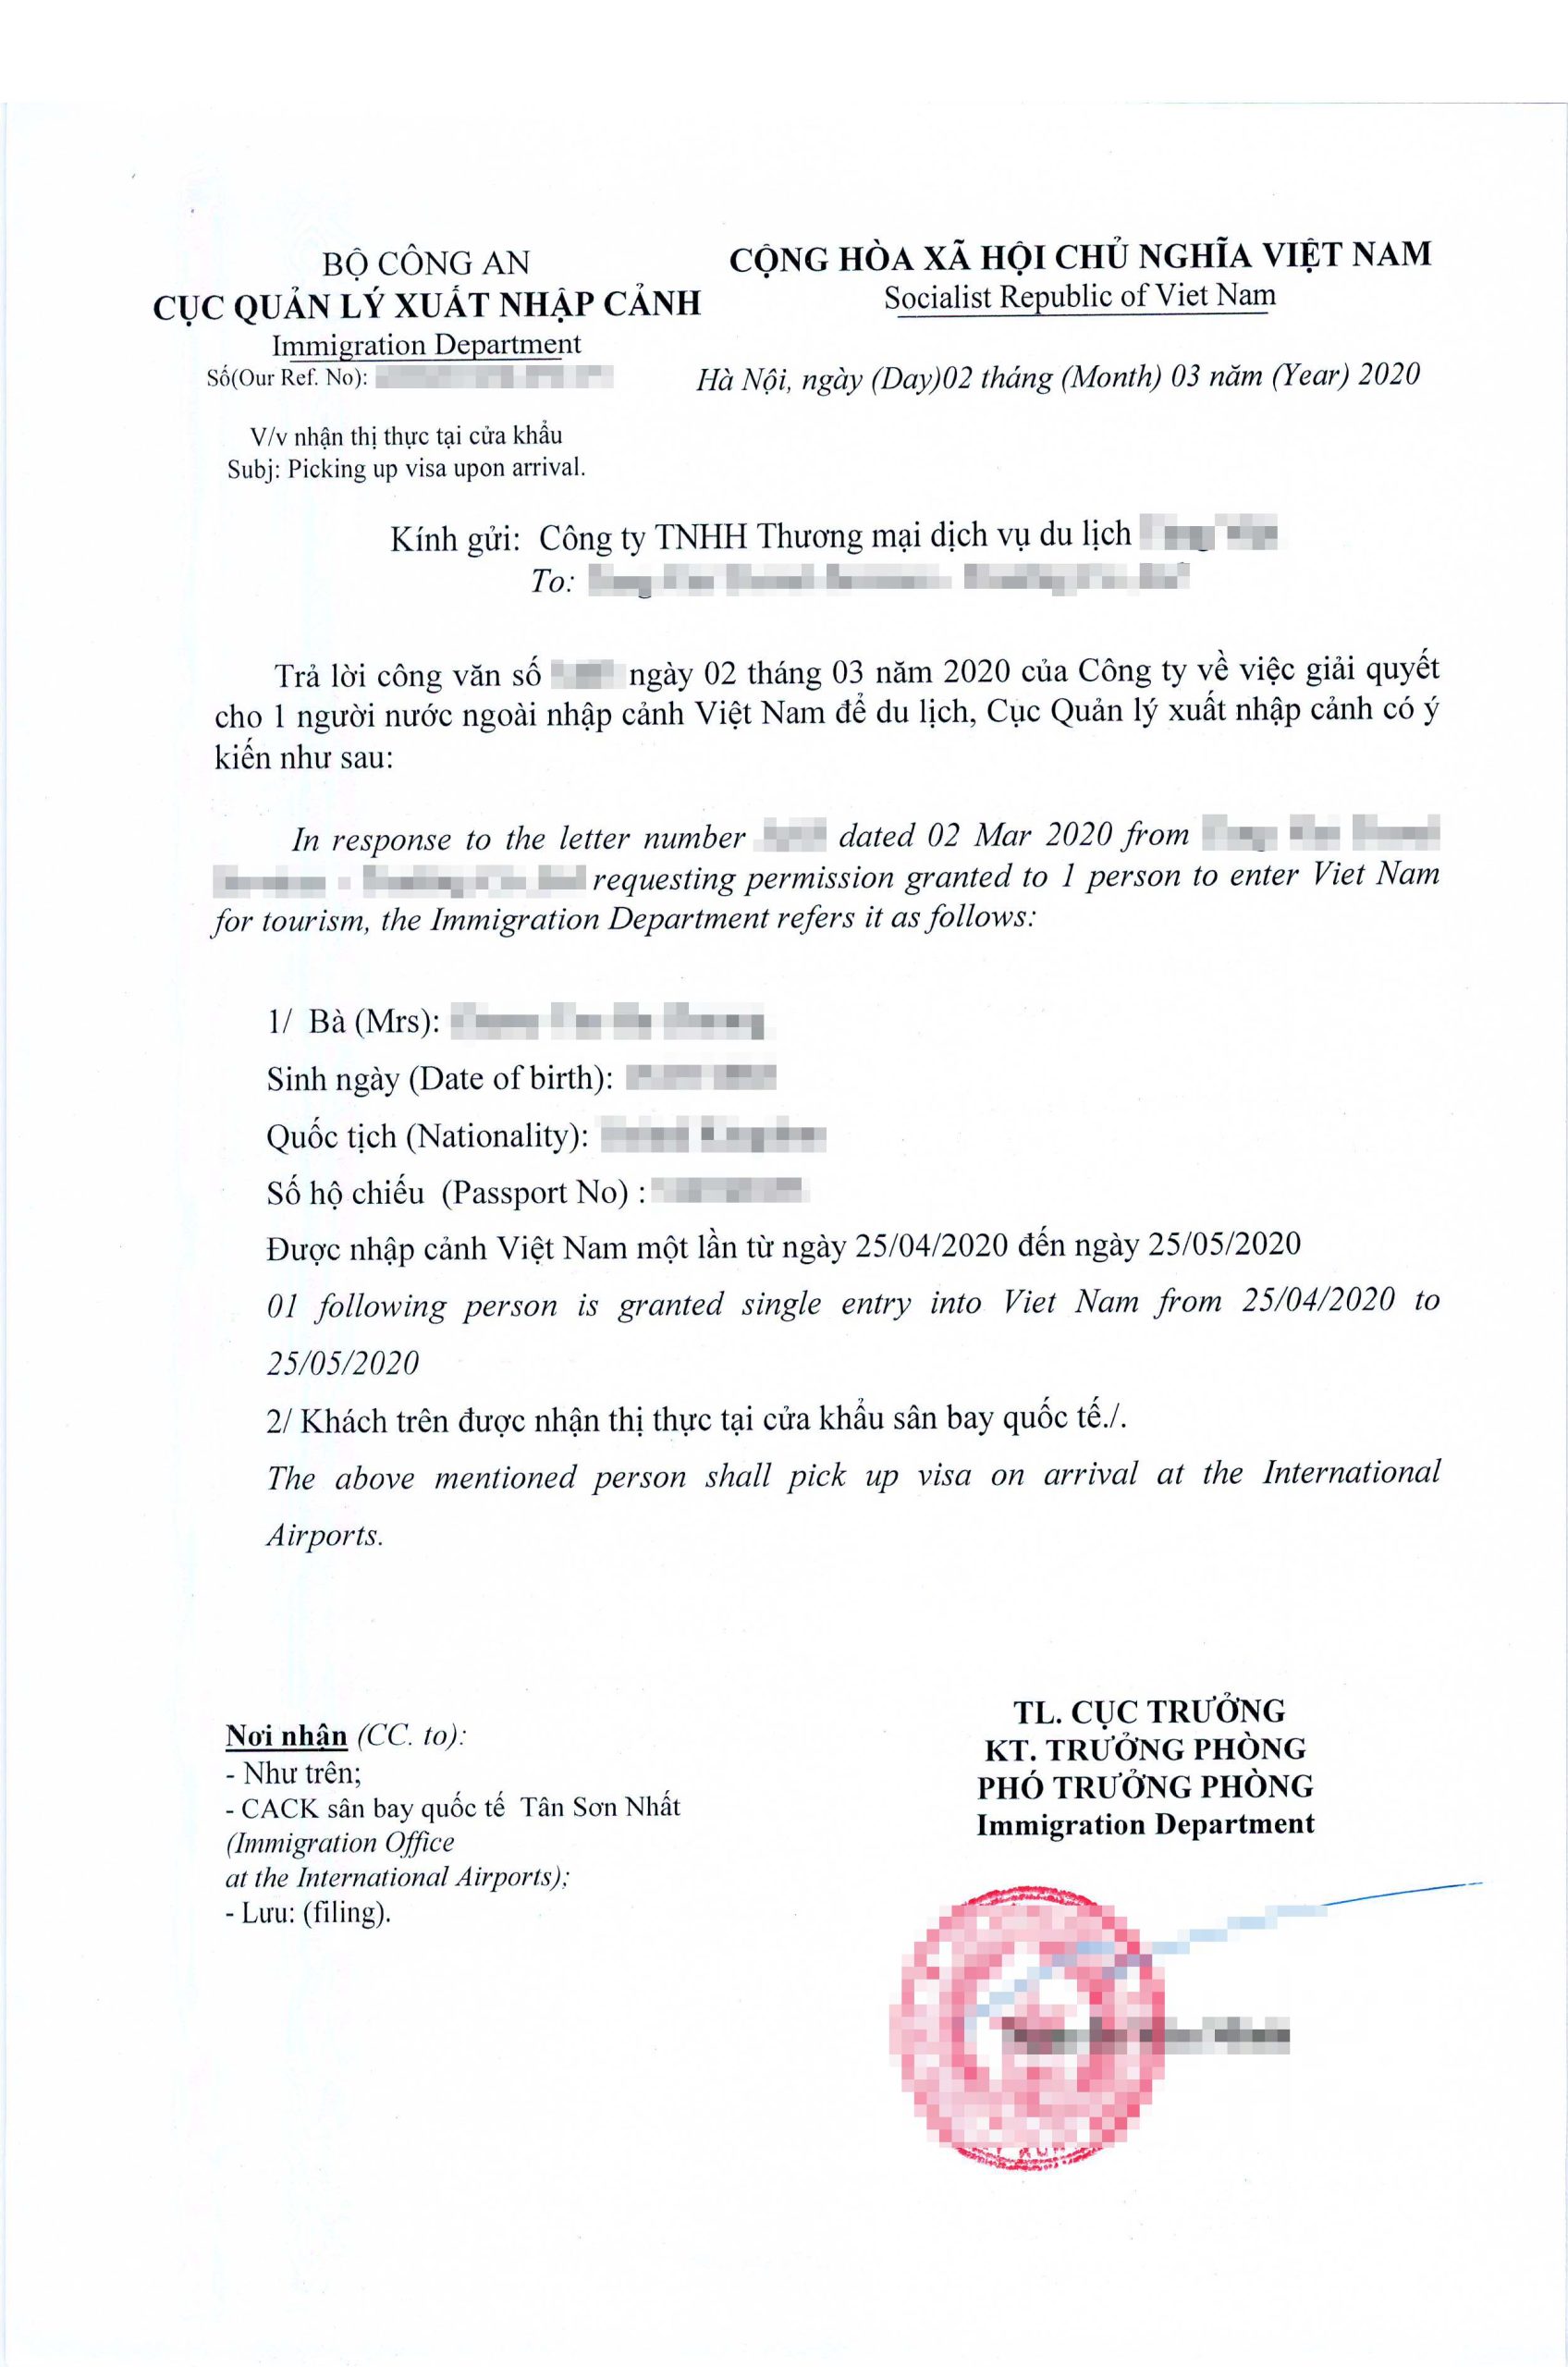 批准函- visa approval letter( 落地簽證)